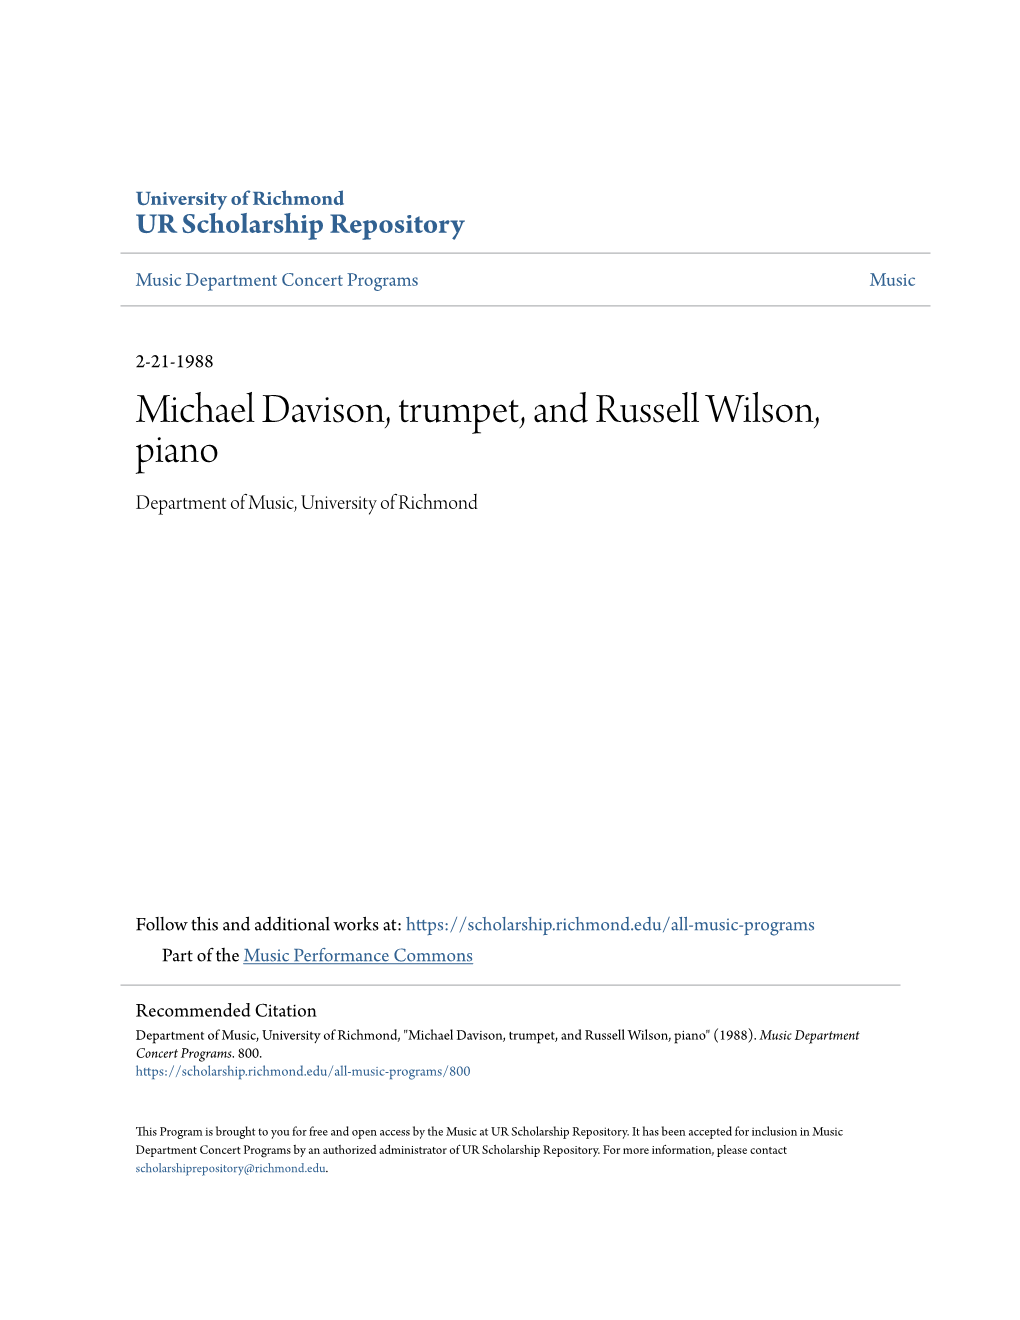 Michael Davison, Trumpet, and Russell Wilson, Piano Department of Music, University of Richmond